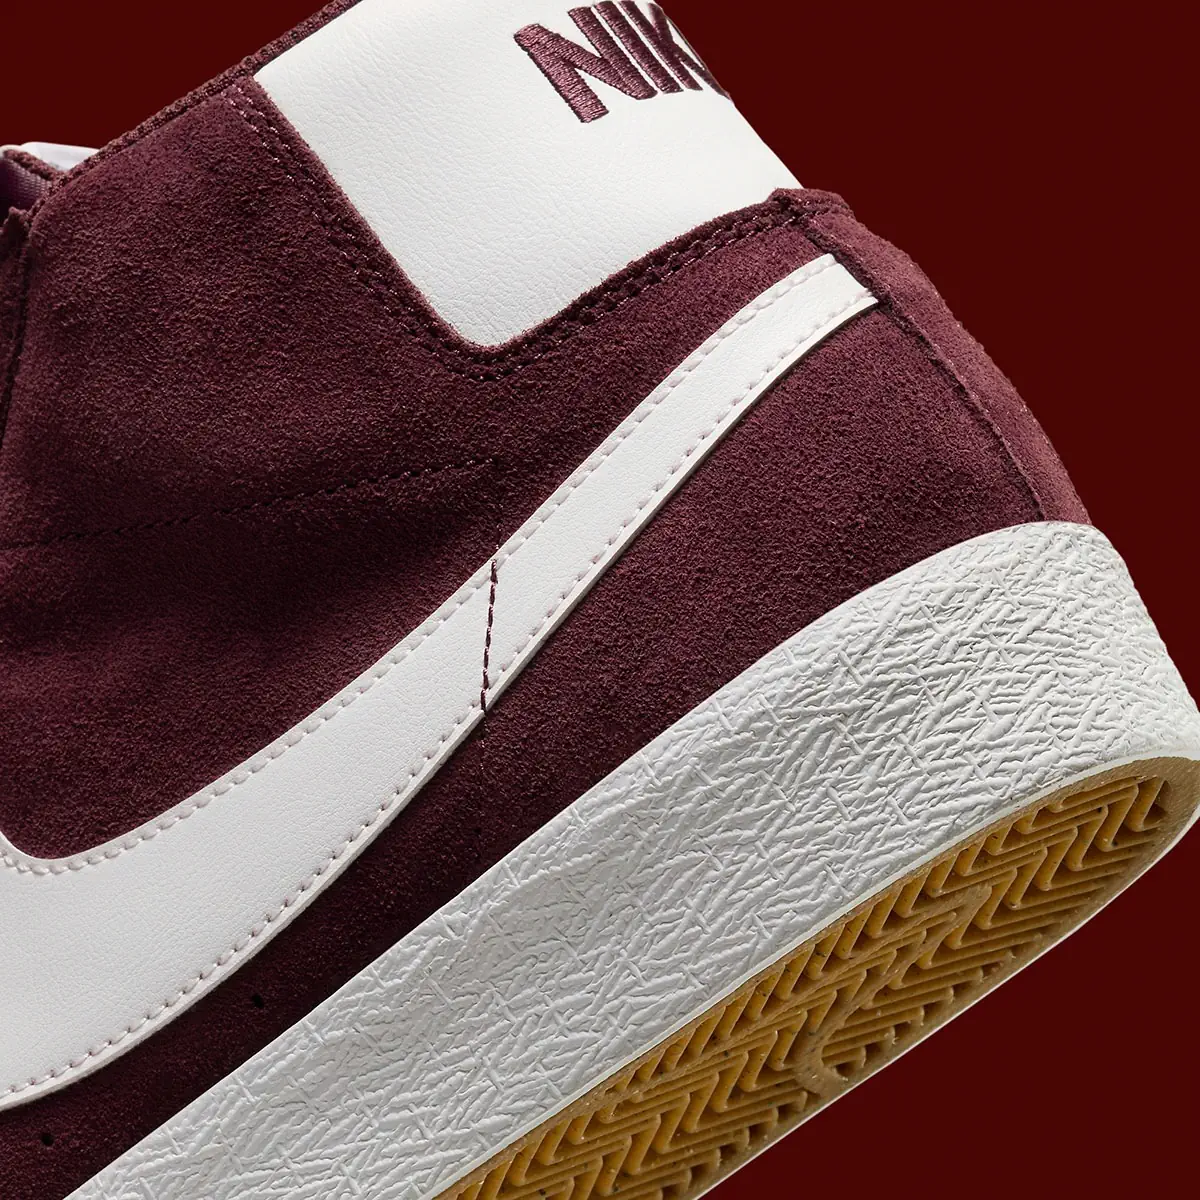 La Nike SB Blazer Mid s'agrandit avec le daim “Burgundy Crush”